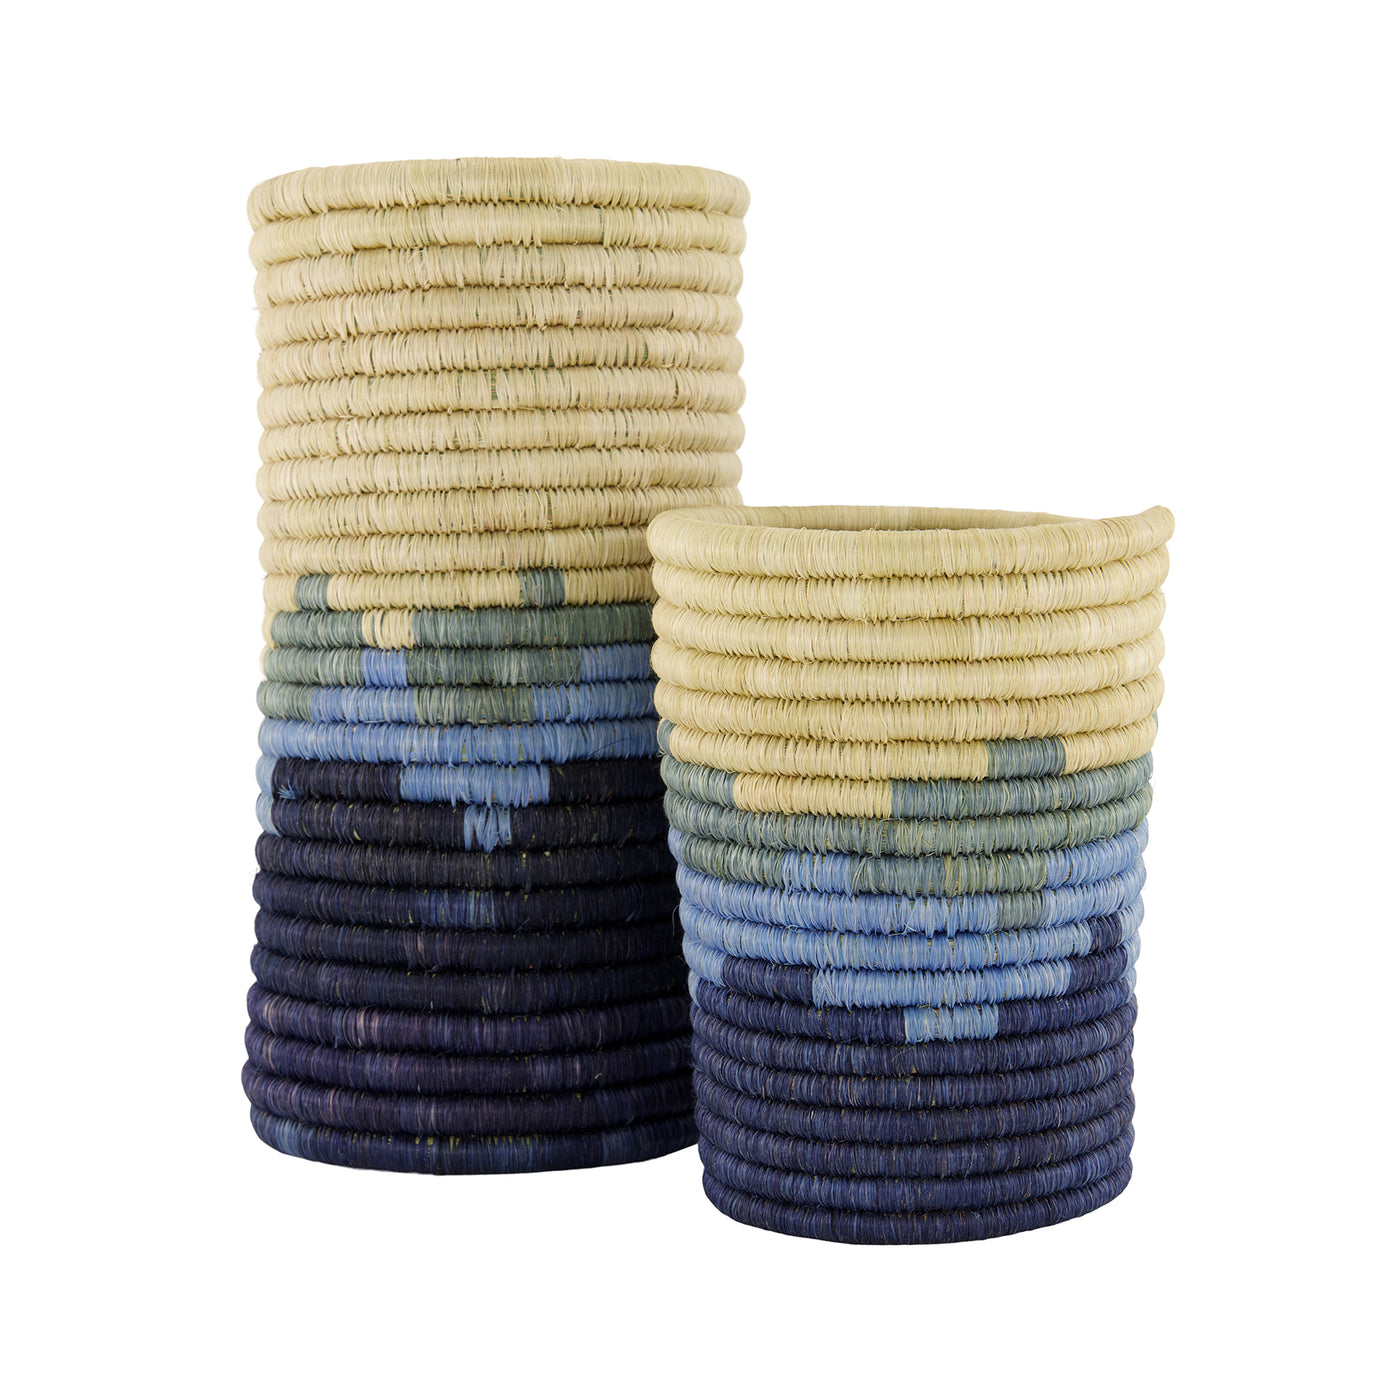 Coastal Vessels - Cylindrical Vases, Set of 2